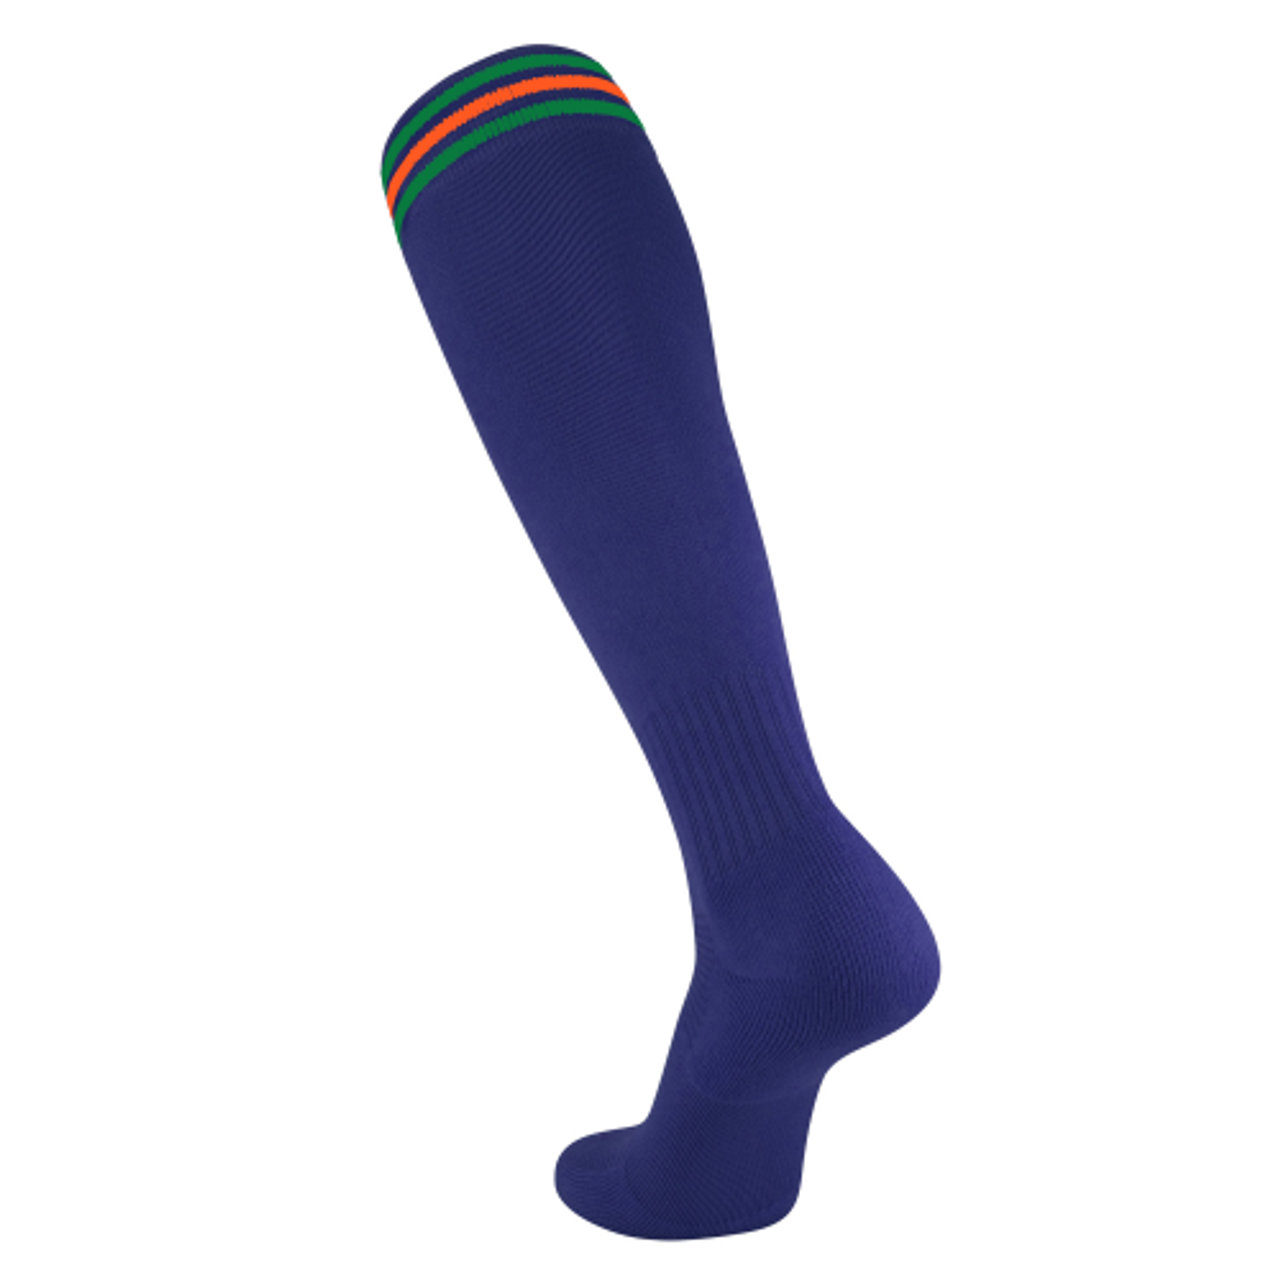 Men's Kelly Green and Navy Blue Striped Socks